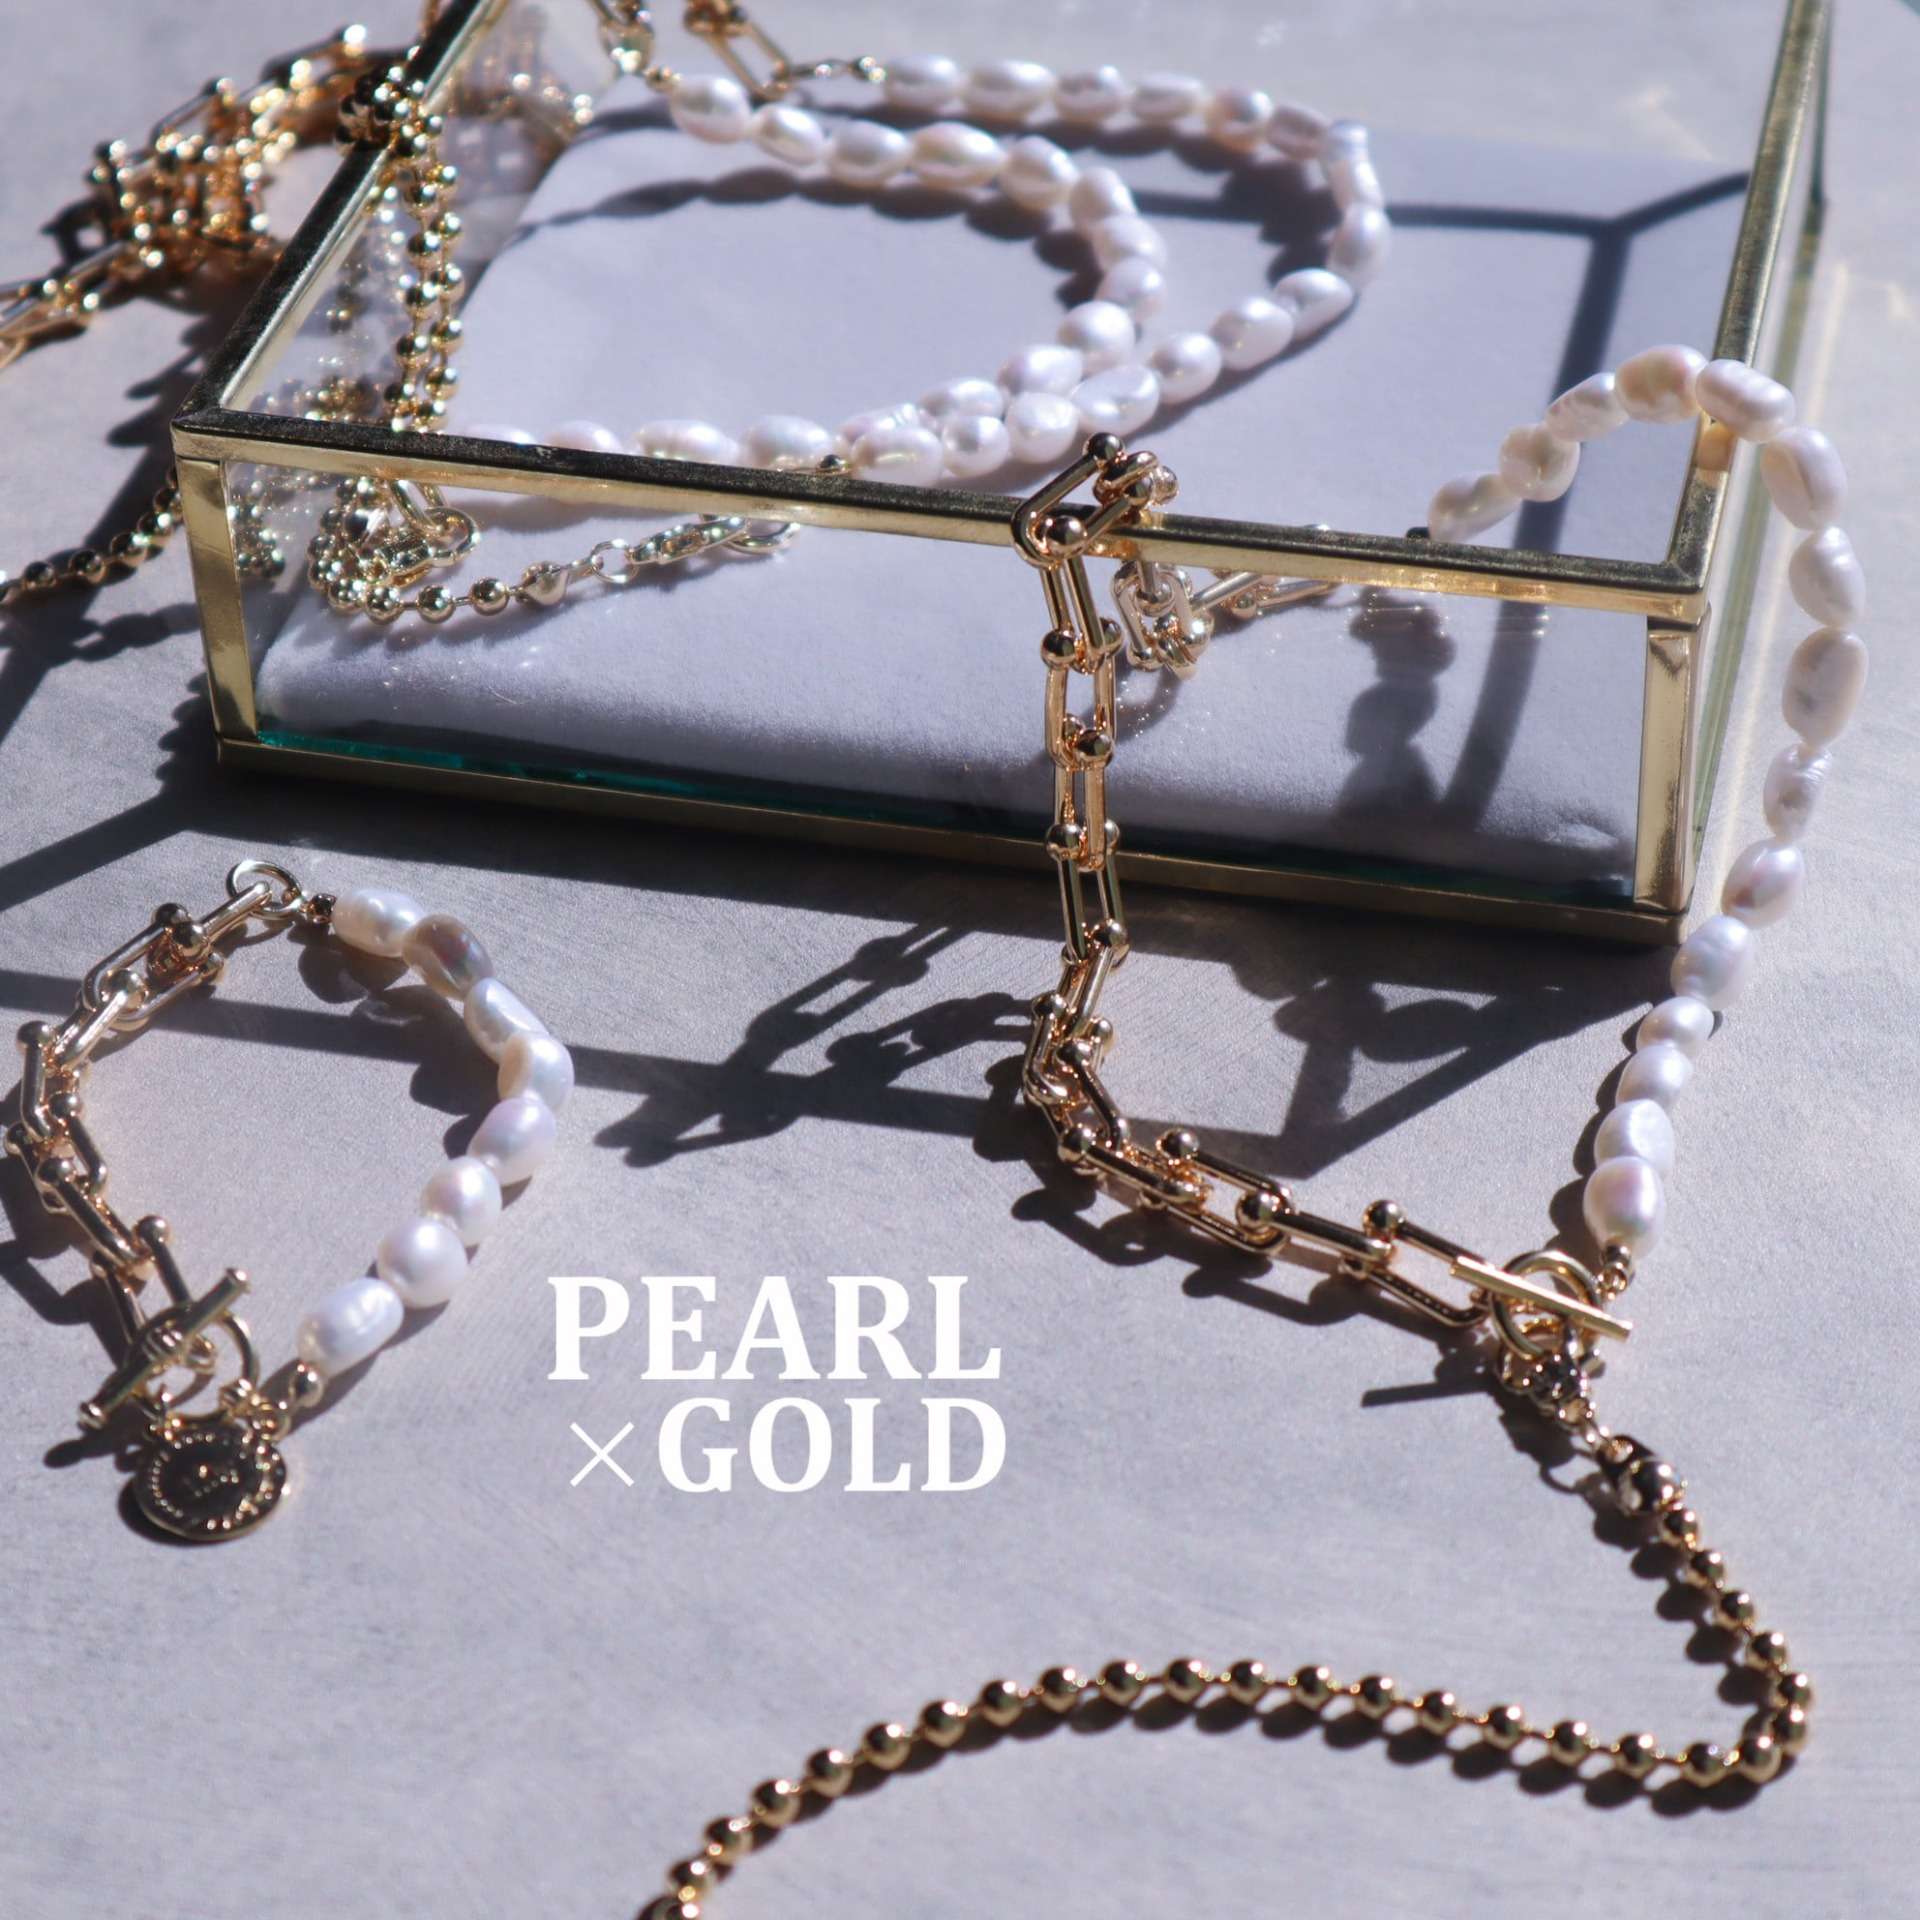 pearl×gold bracelet